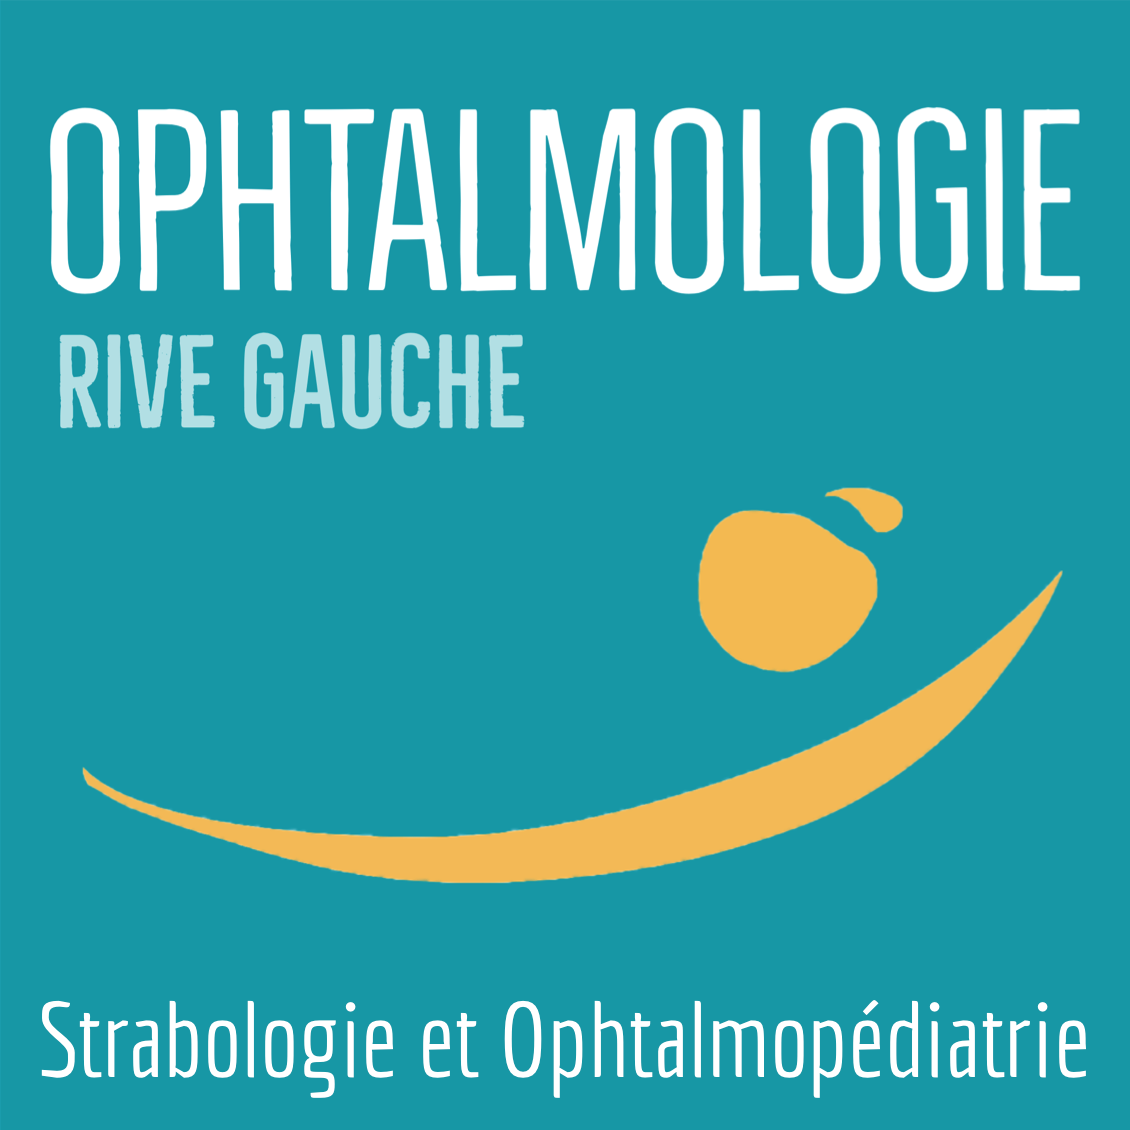 Chirurgie Paralysies oculomotrices - Ophtalmologie Rive Gauche